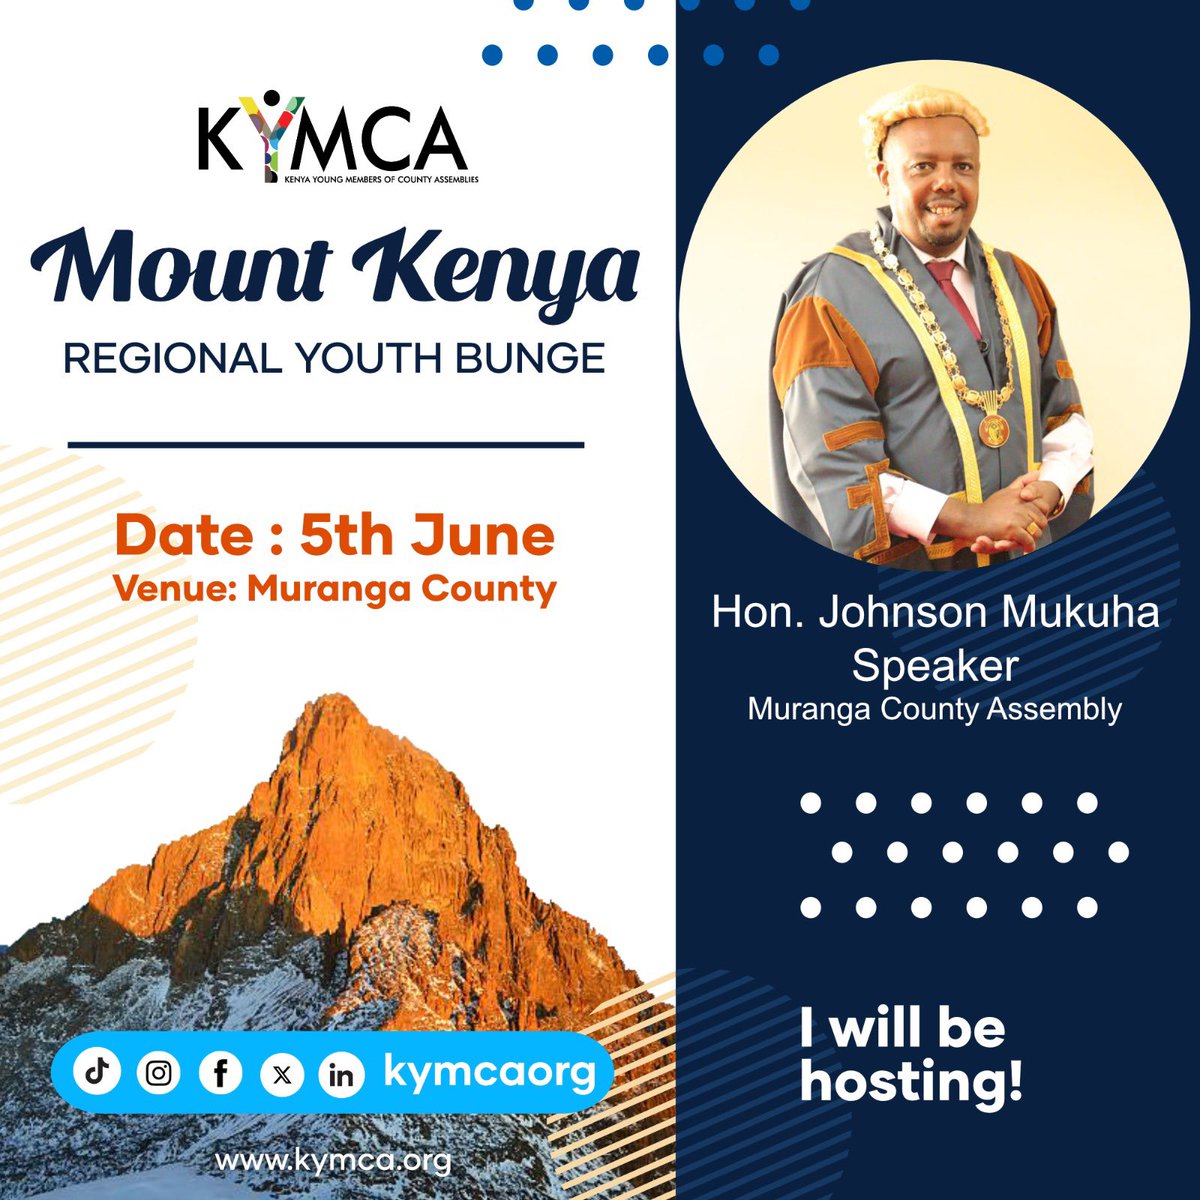 Grateful to @SpeakerMuranga1 for hosting and supporting youth empowerment. Together, we'll drive the youth agenda forward. #MtKenyaYouthBunge #Tuchapiane @WeAreNIMD @MurangaAssembly